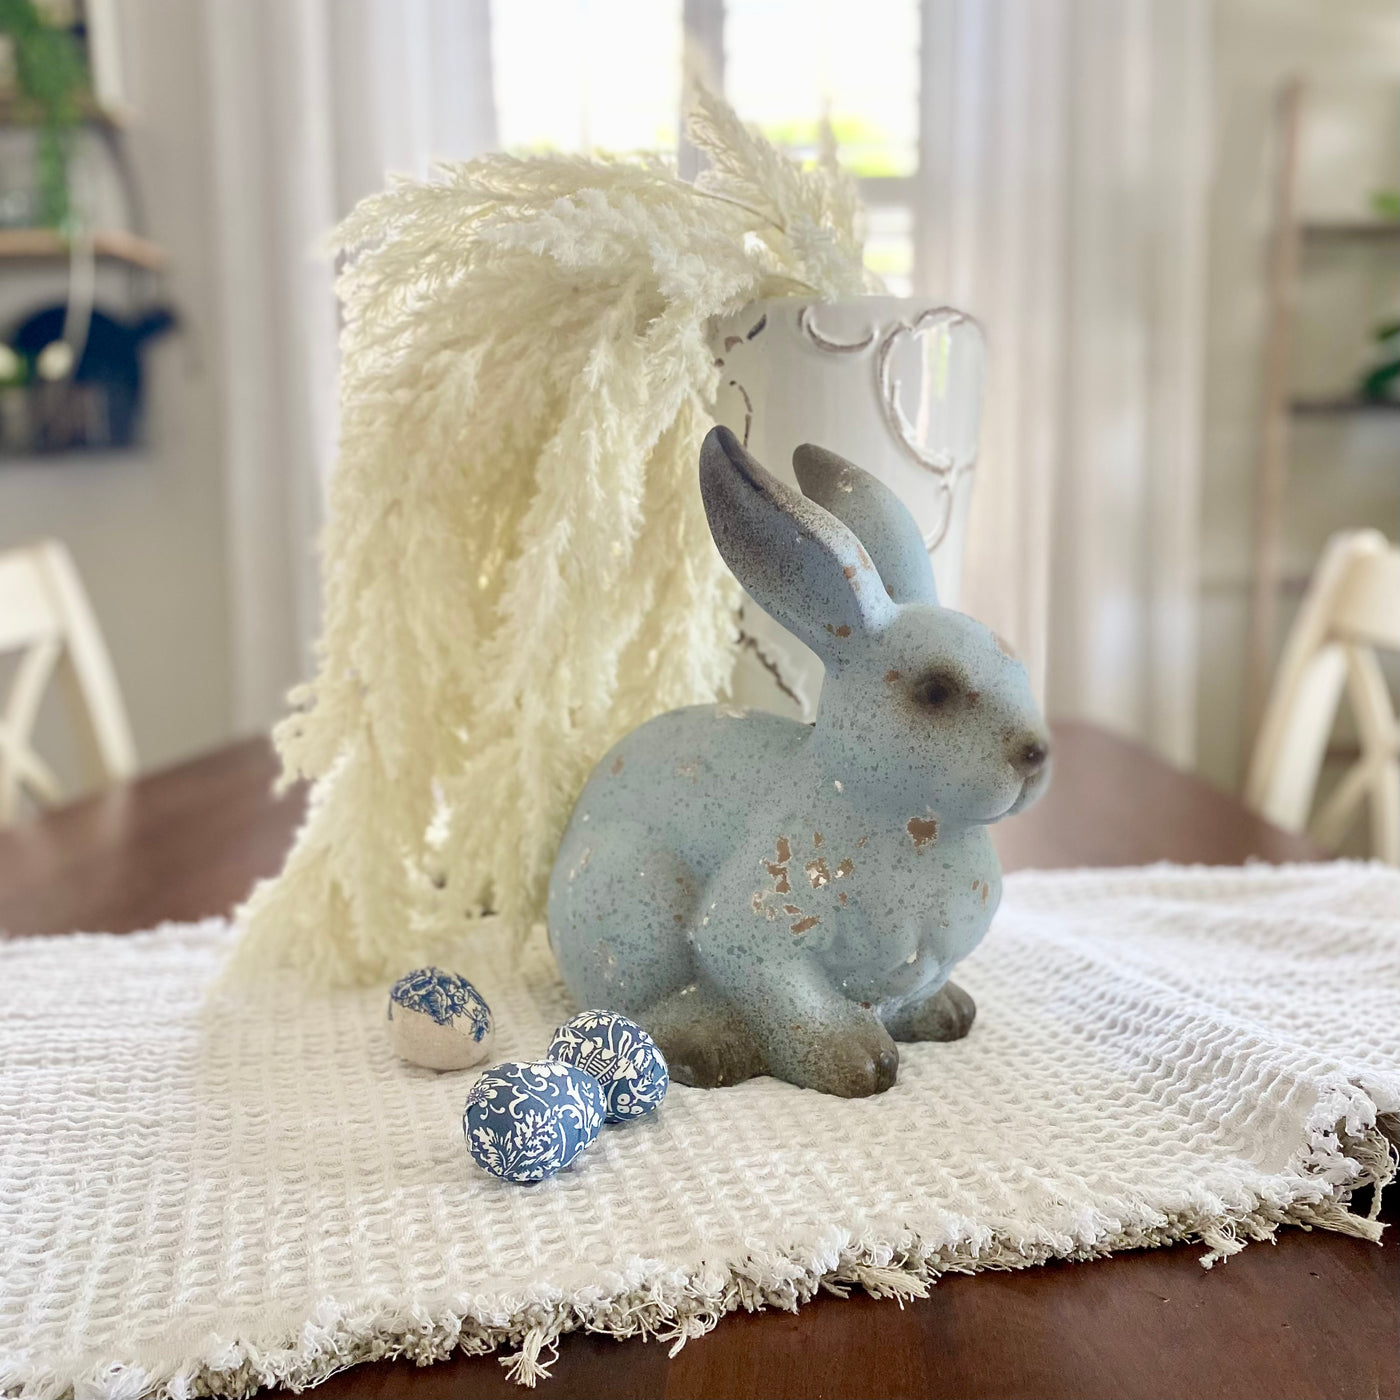 Weathered Blue Terracotta Rabbits